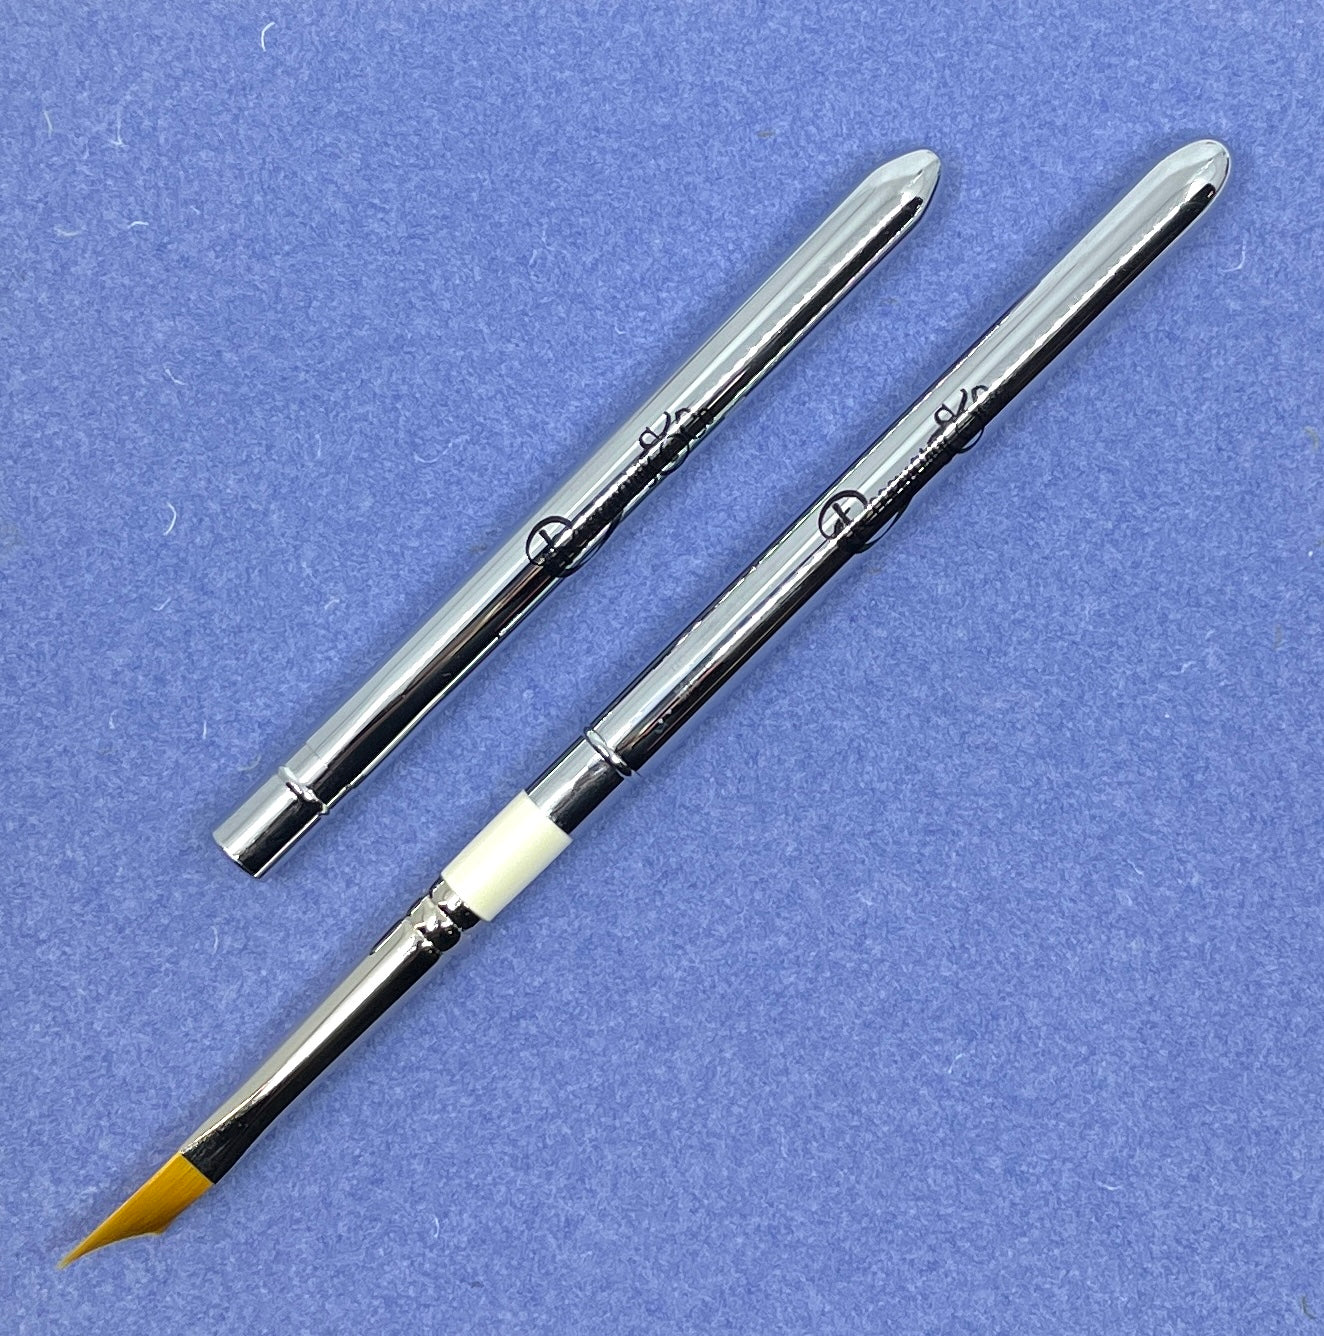 ROSEMARY & CO Reversible Pocket Travel Brush - R18 - Golden Synthetic - Triangular - Size 8 (6 x 18mm)